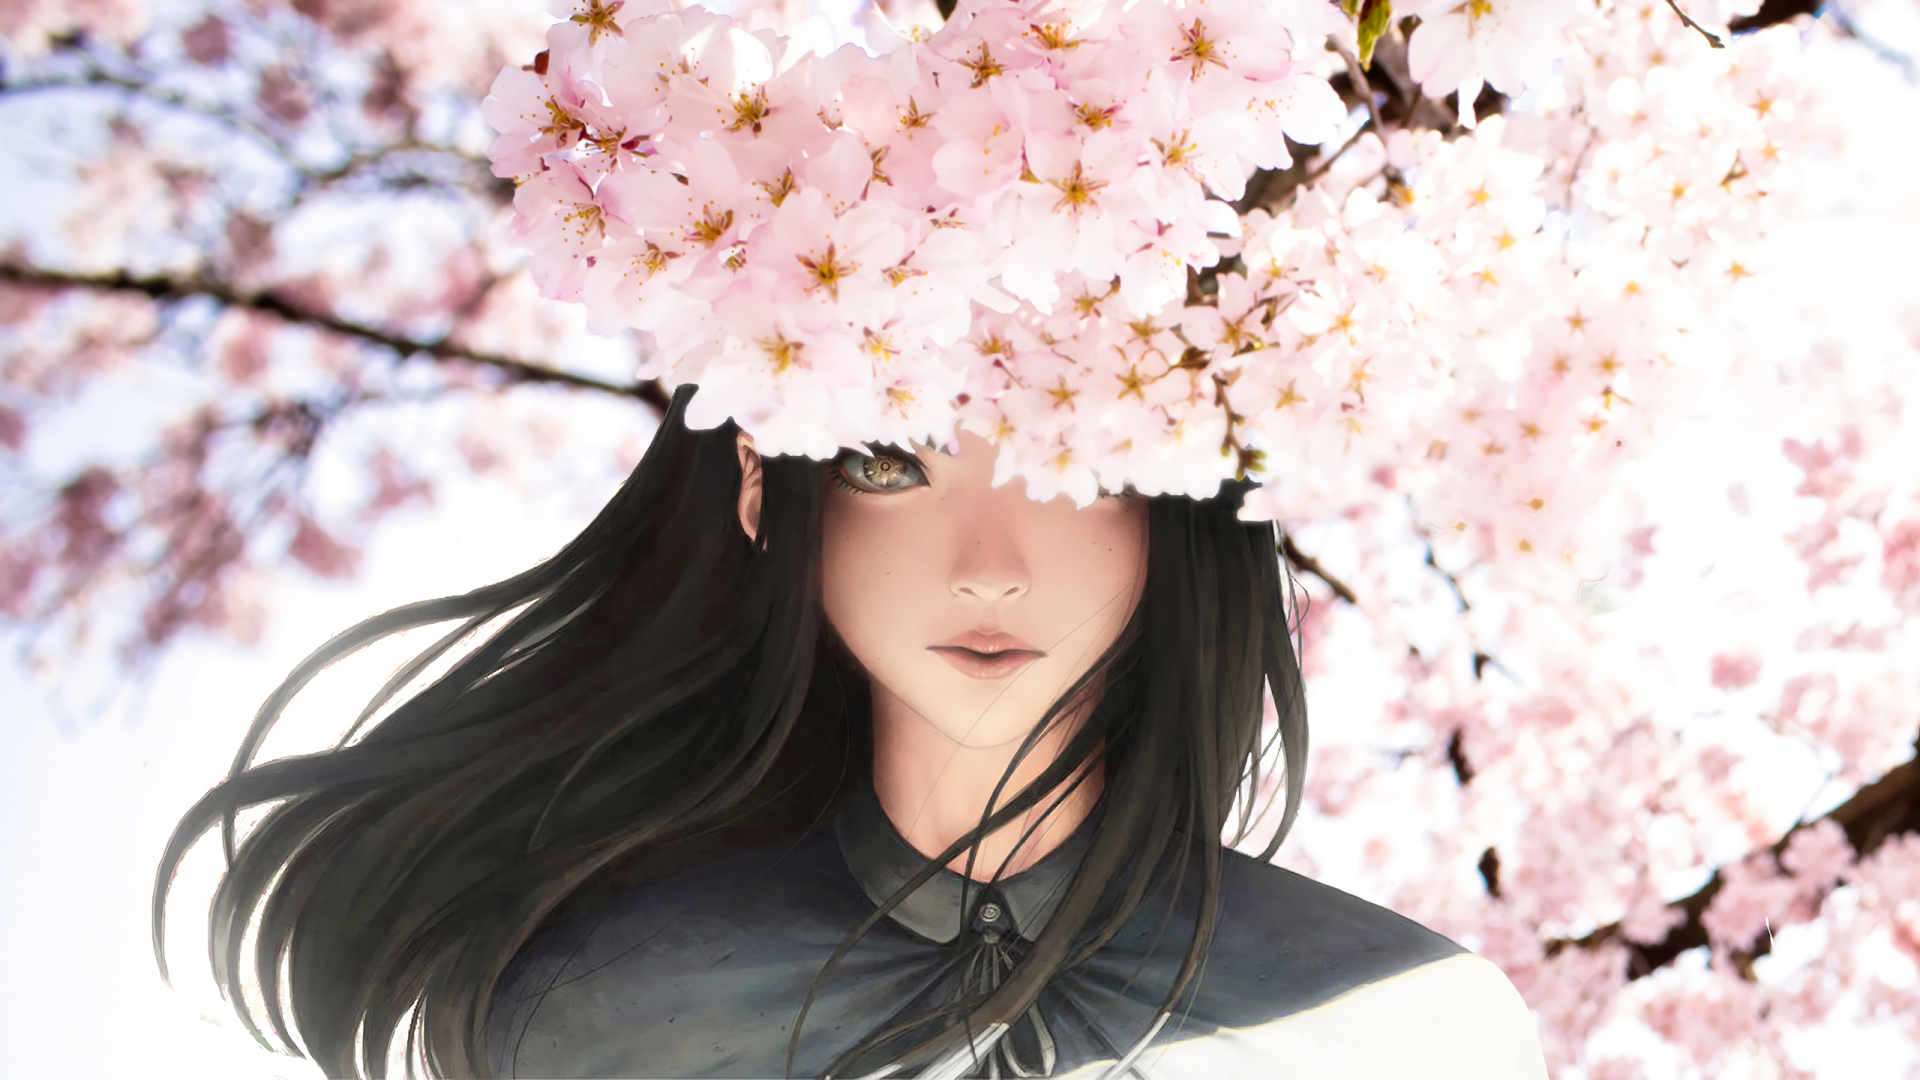 Download wallpaper 1920x1080 anime girl, original, cherry blossom